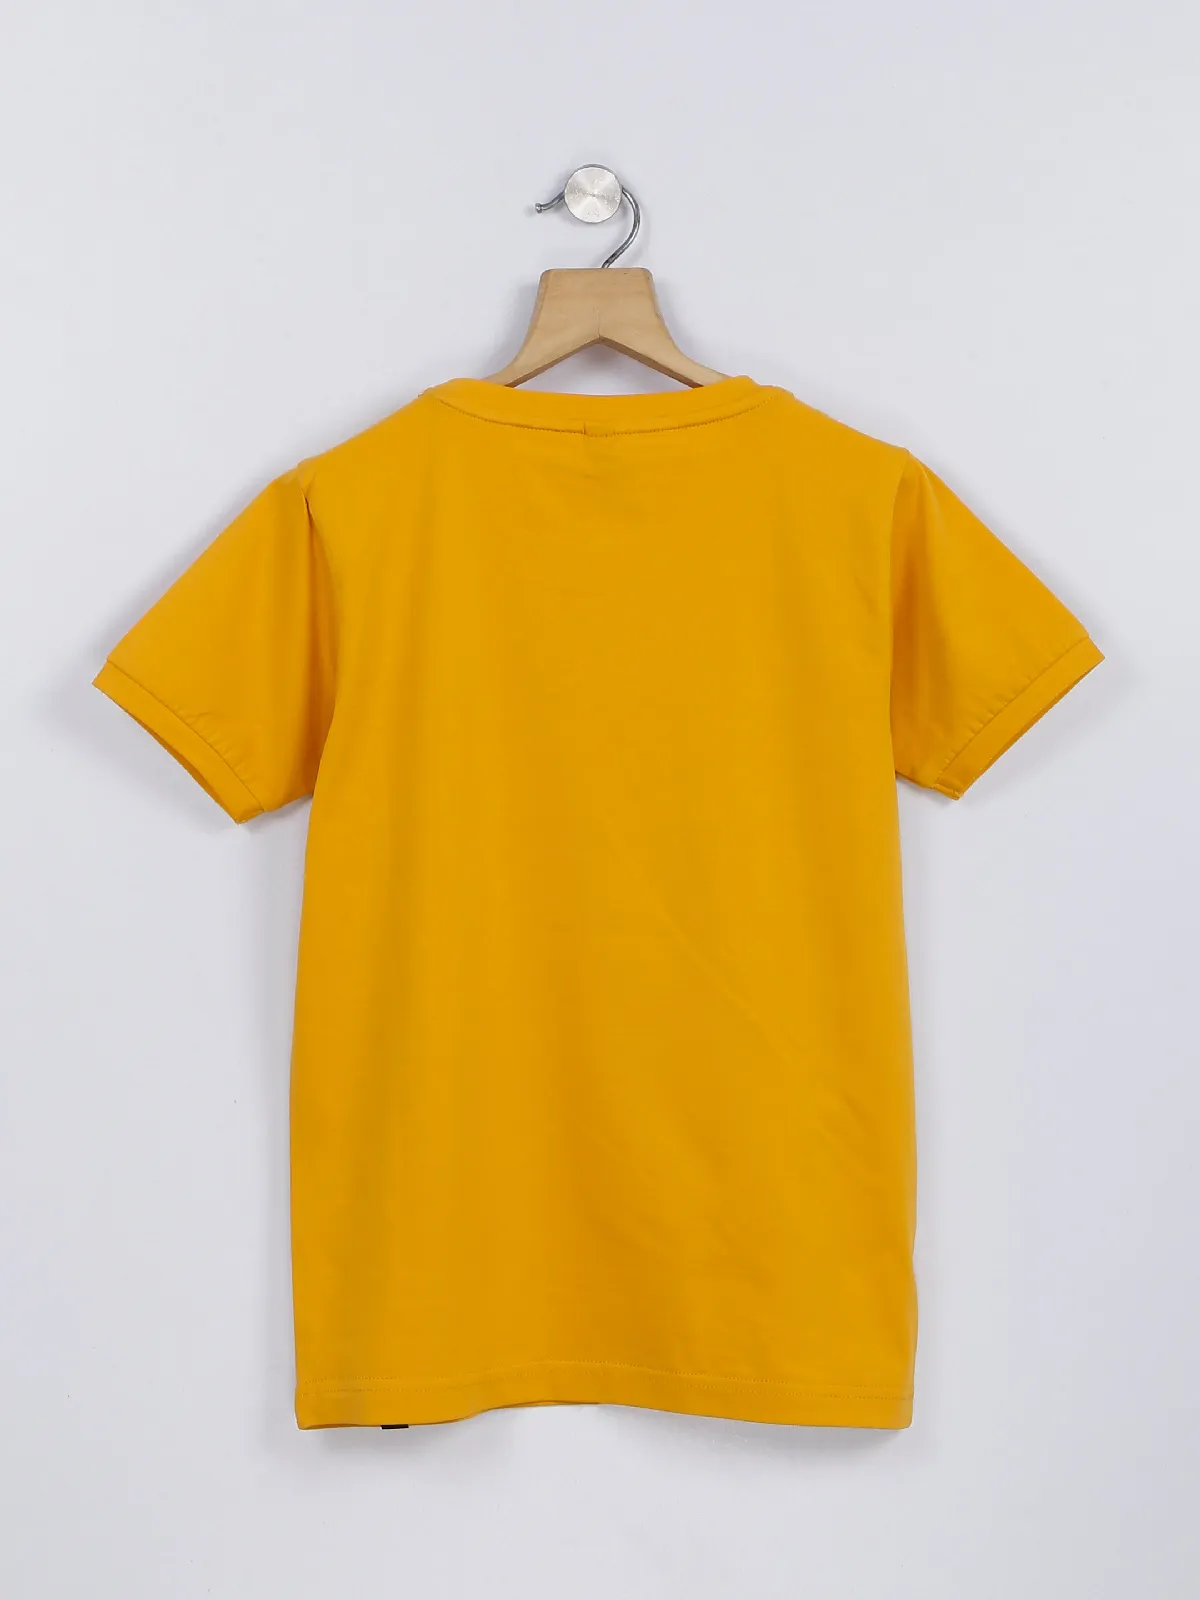 Red Sound mustard yellow printed t shirt